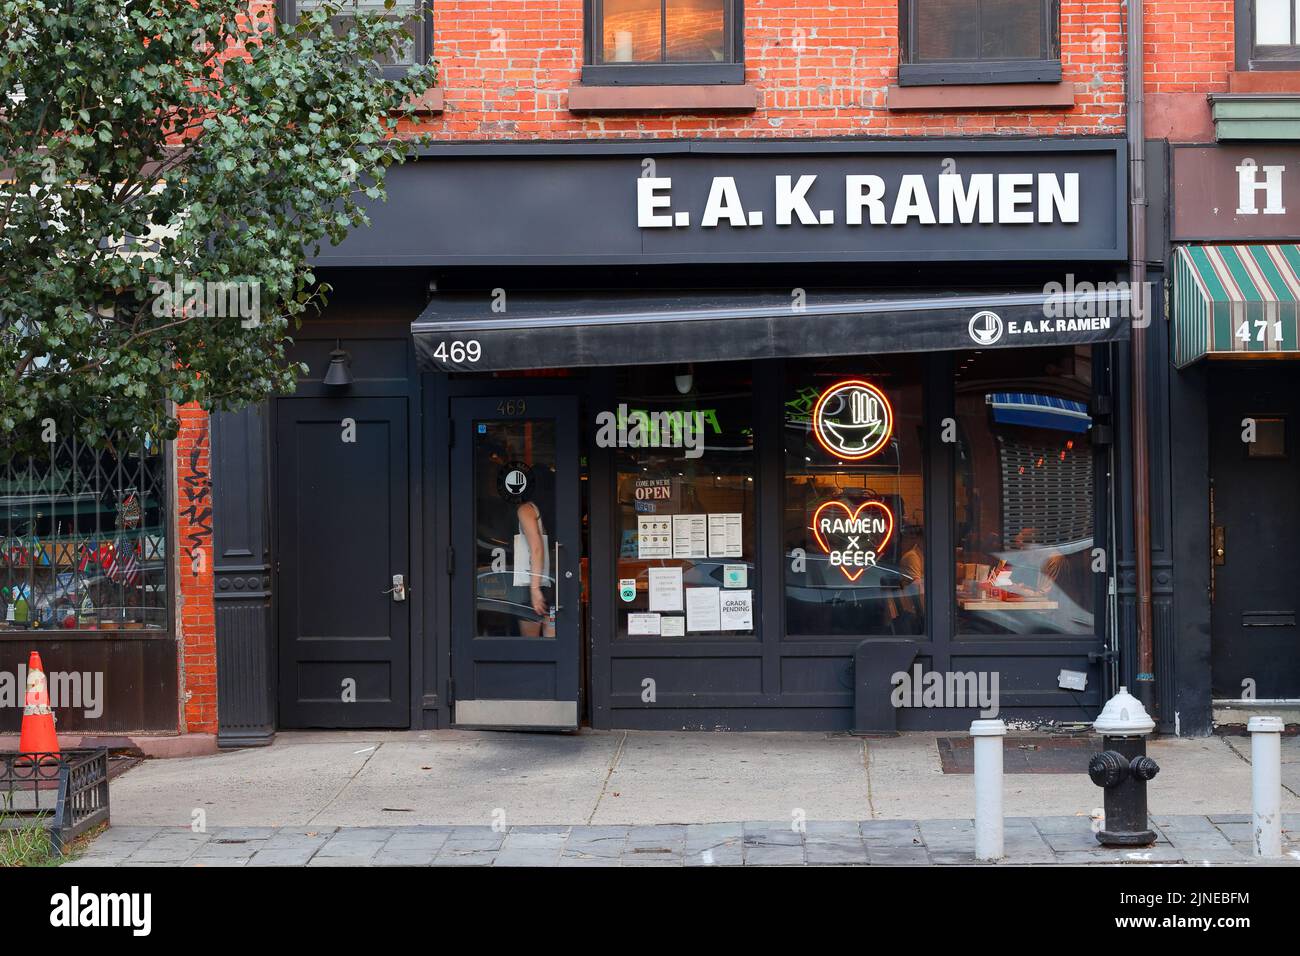 E.A.K. Ramen, 469 6th Ave, New York, NY. Façade extérieure d'un restaurant japonais de ramen dans Greenwich Village de Manhattan Banque D'Images